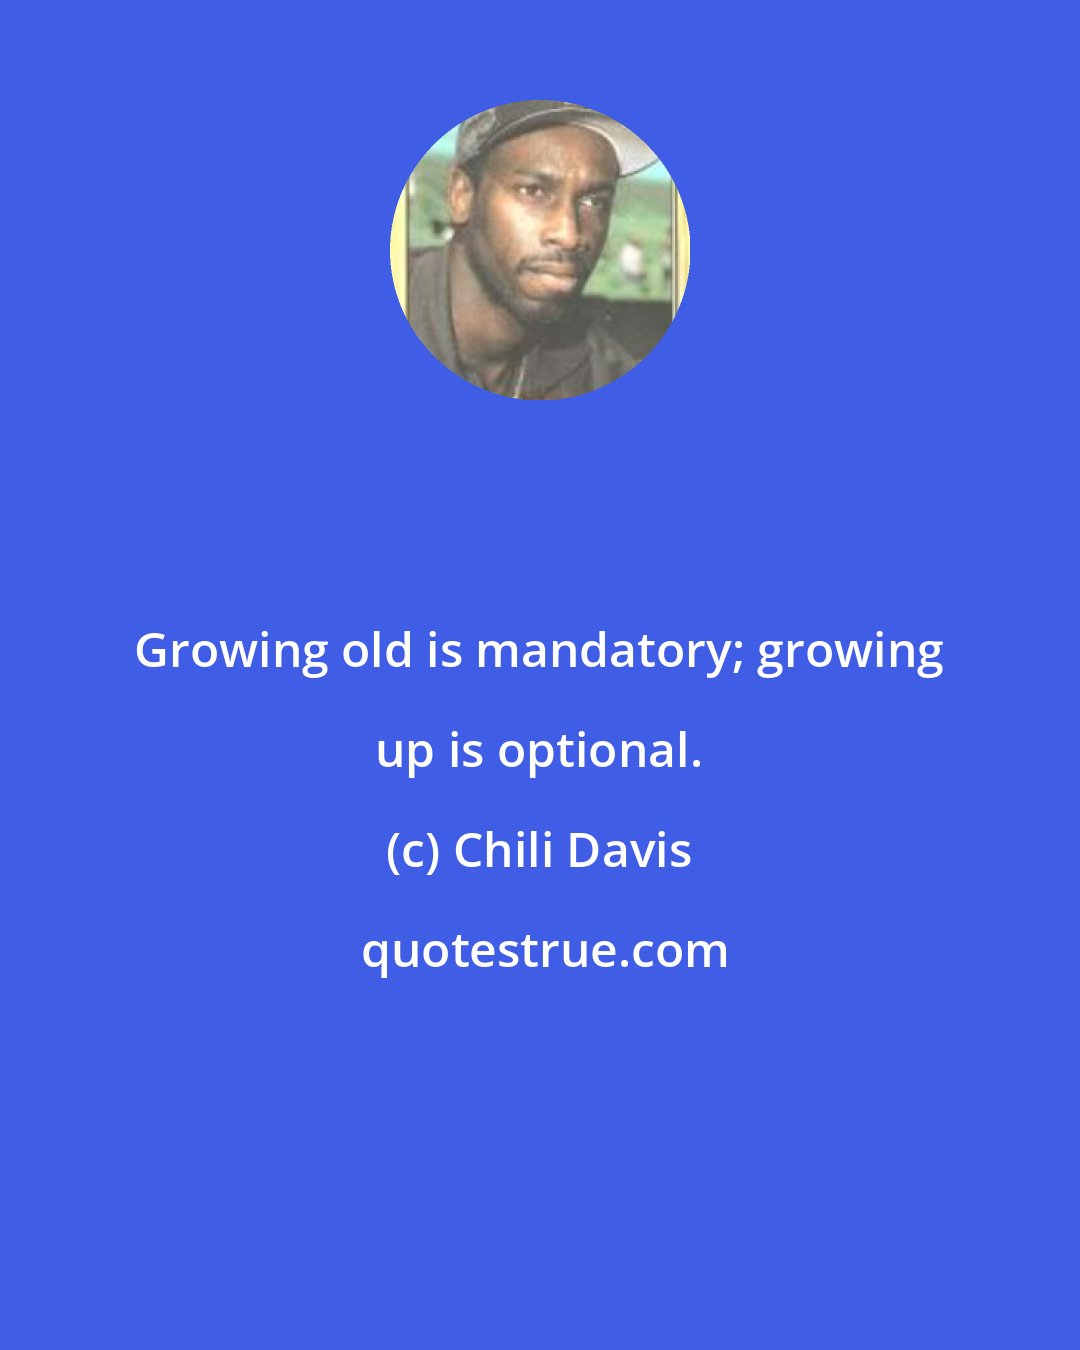 Chili Davis: Growing old is mandatory; growing up is optional.